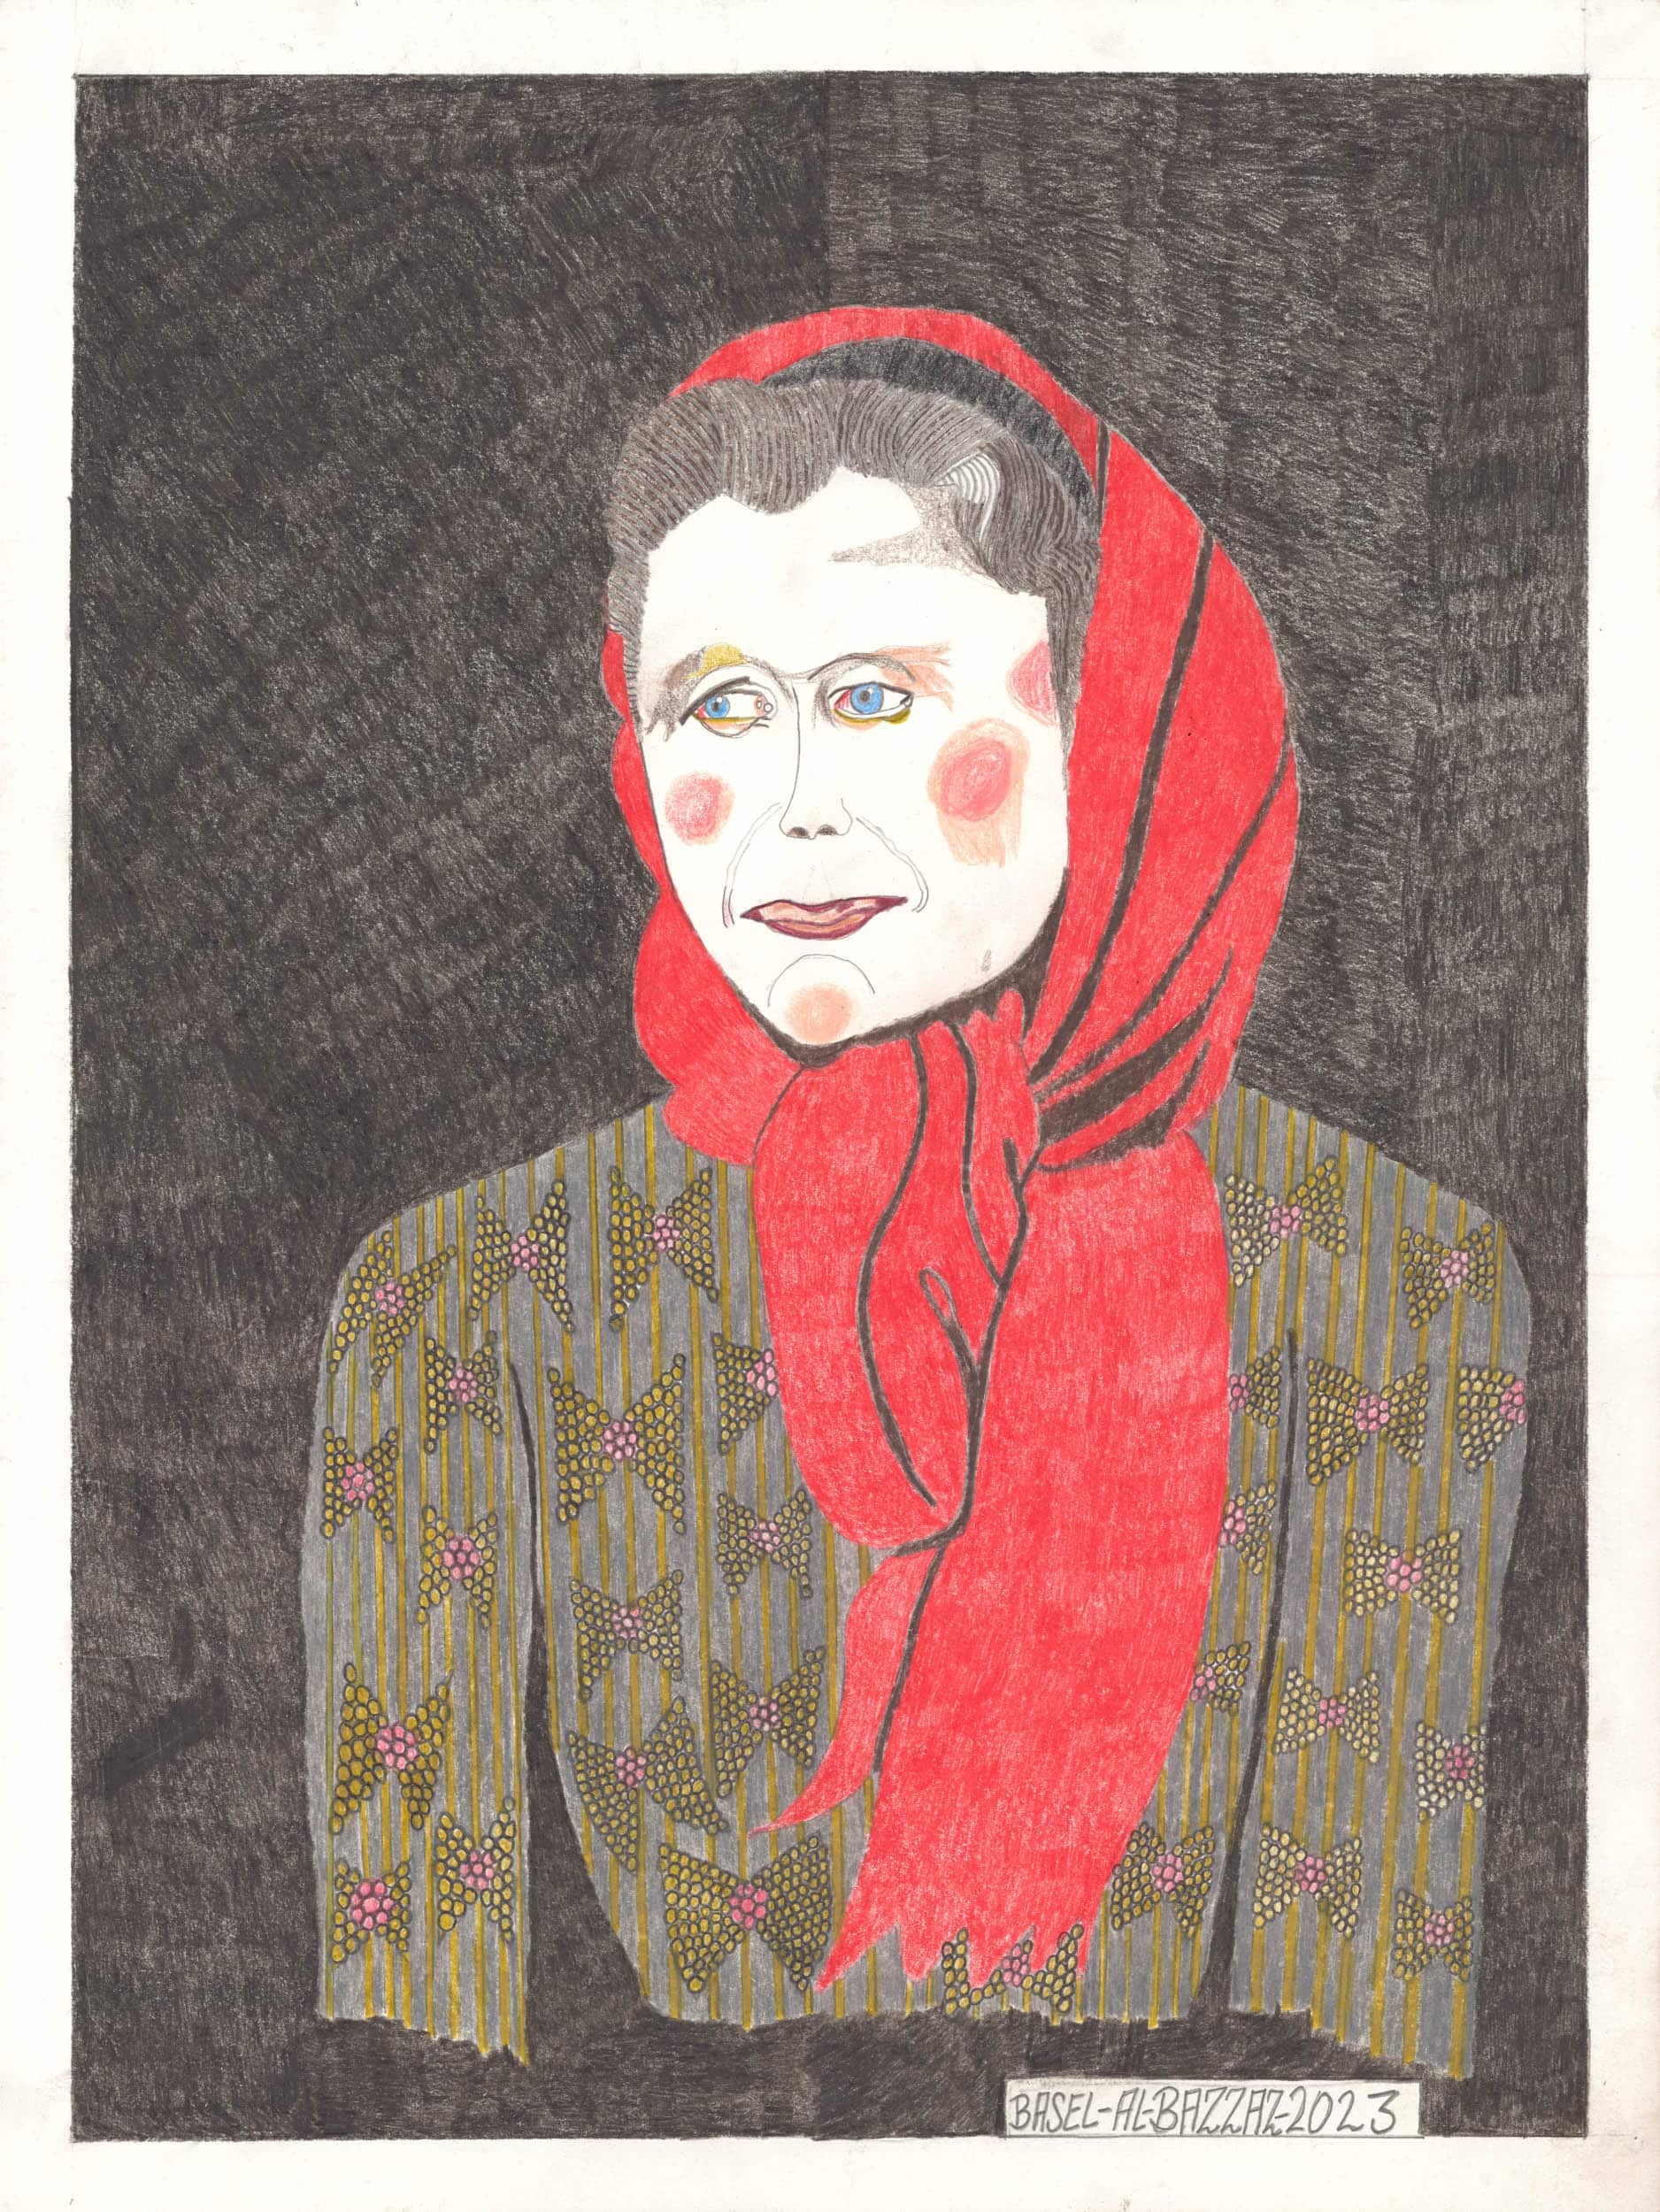 al-bazzaz basel - Alte Frau mit rotem Kopftuch / Old woman with red headscarf